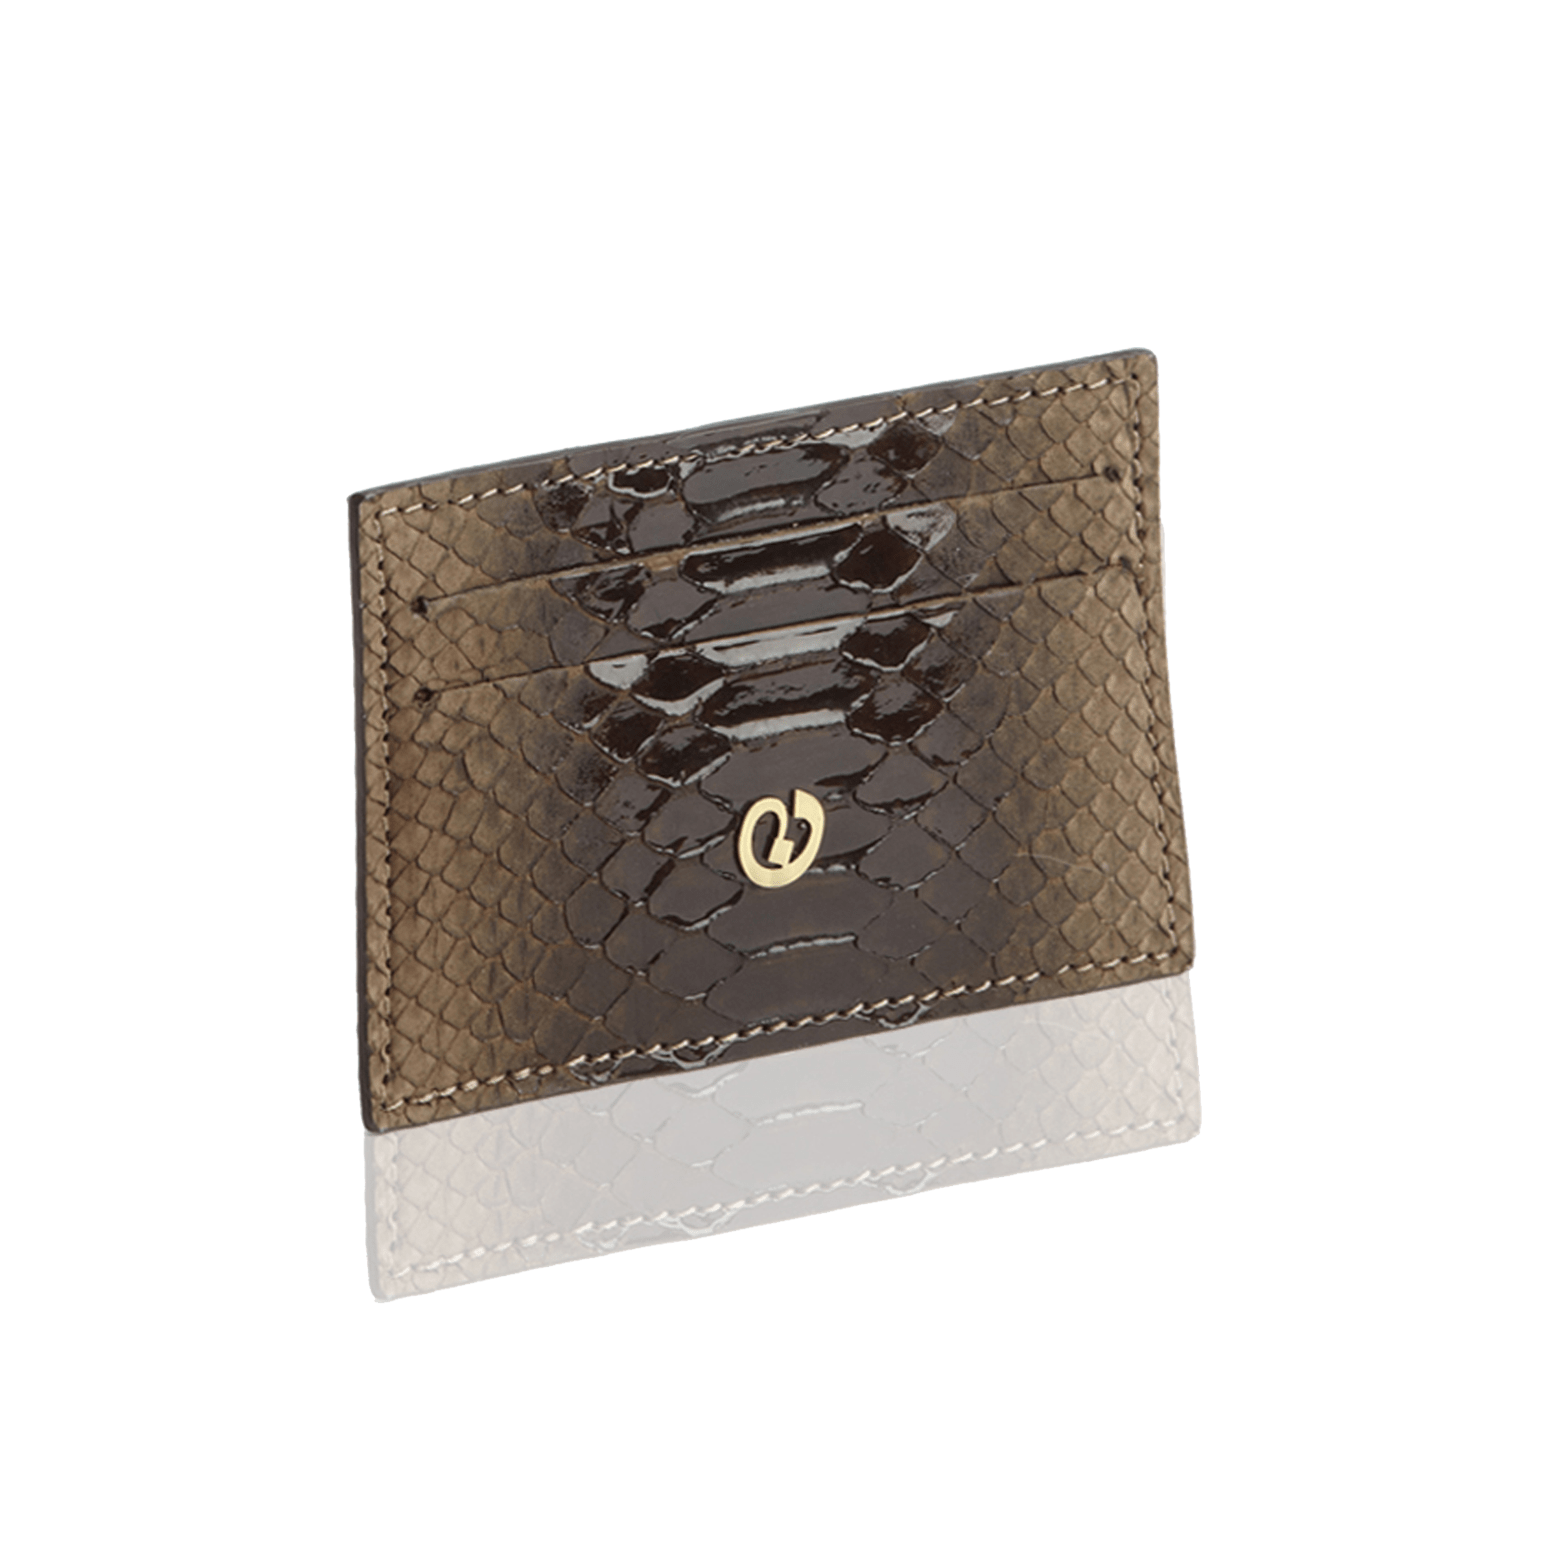  LIZHIGU Wallets women small wallet for women PU